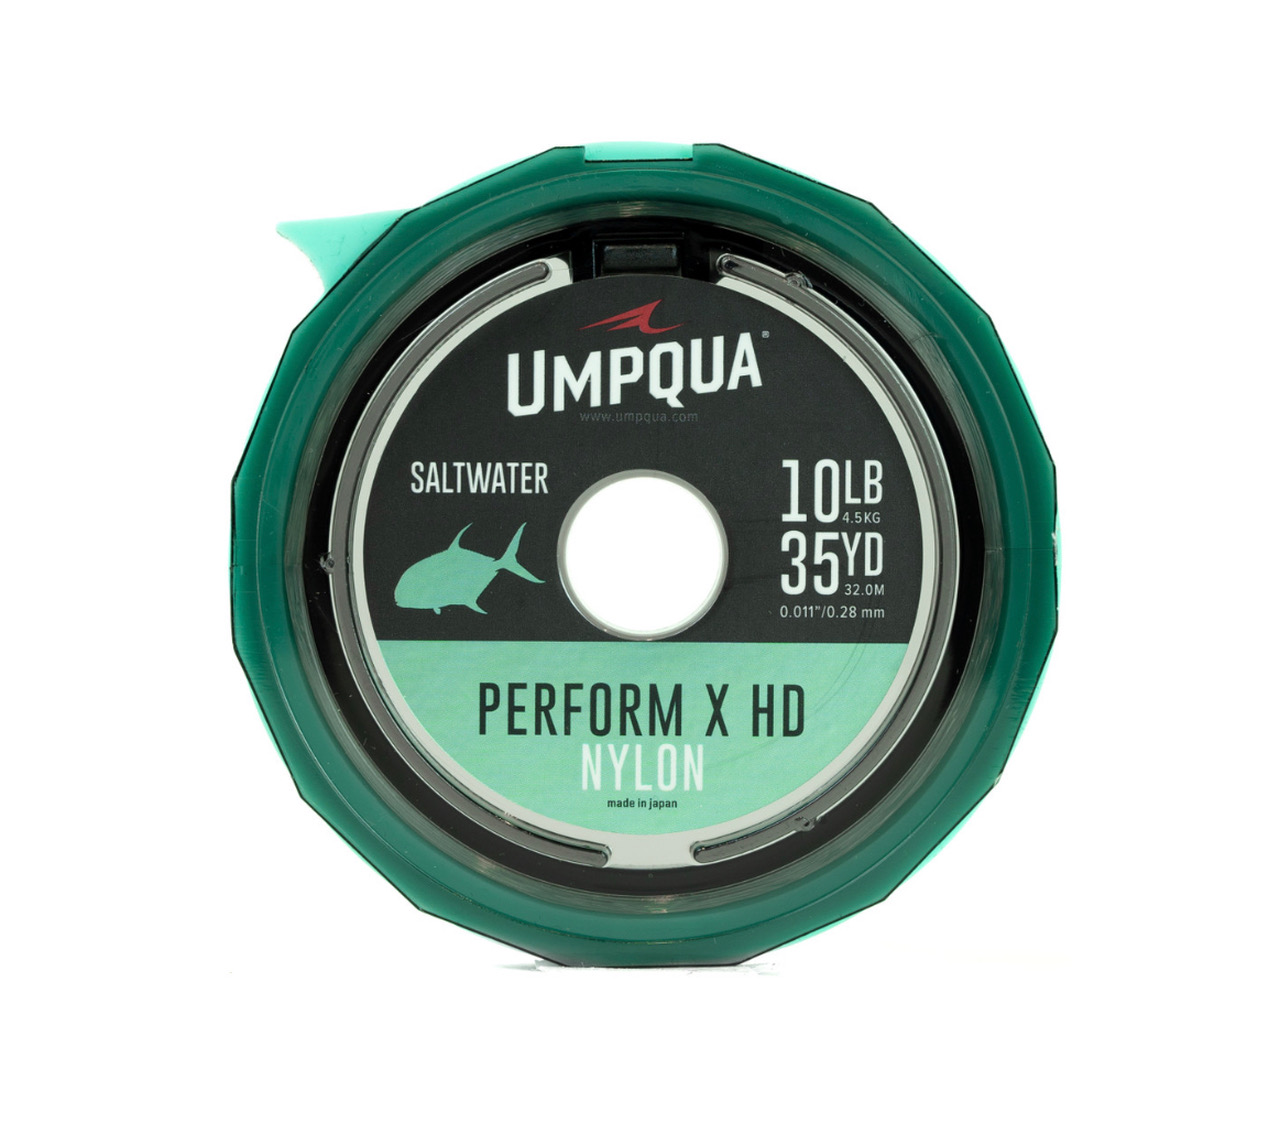 Umpqua Perform X HD Saltwater Nylon Tippet - 35yd - 10lb